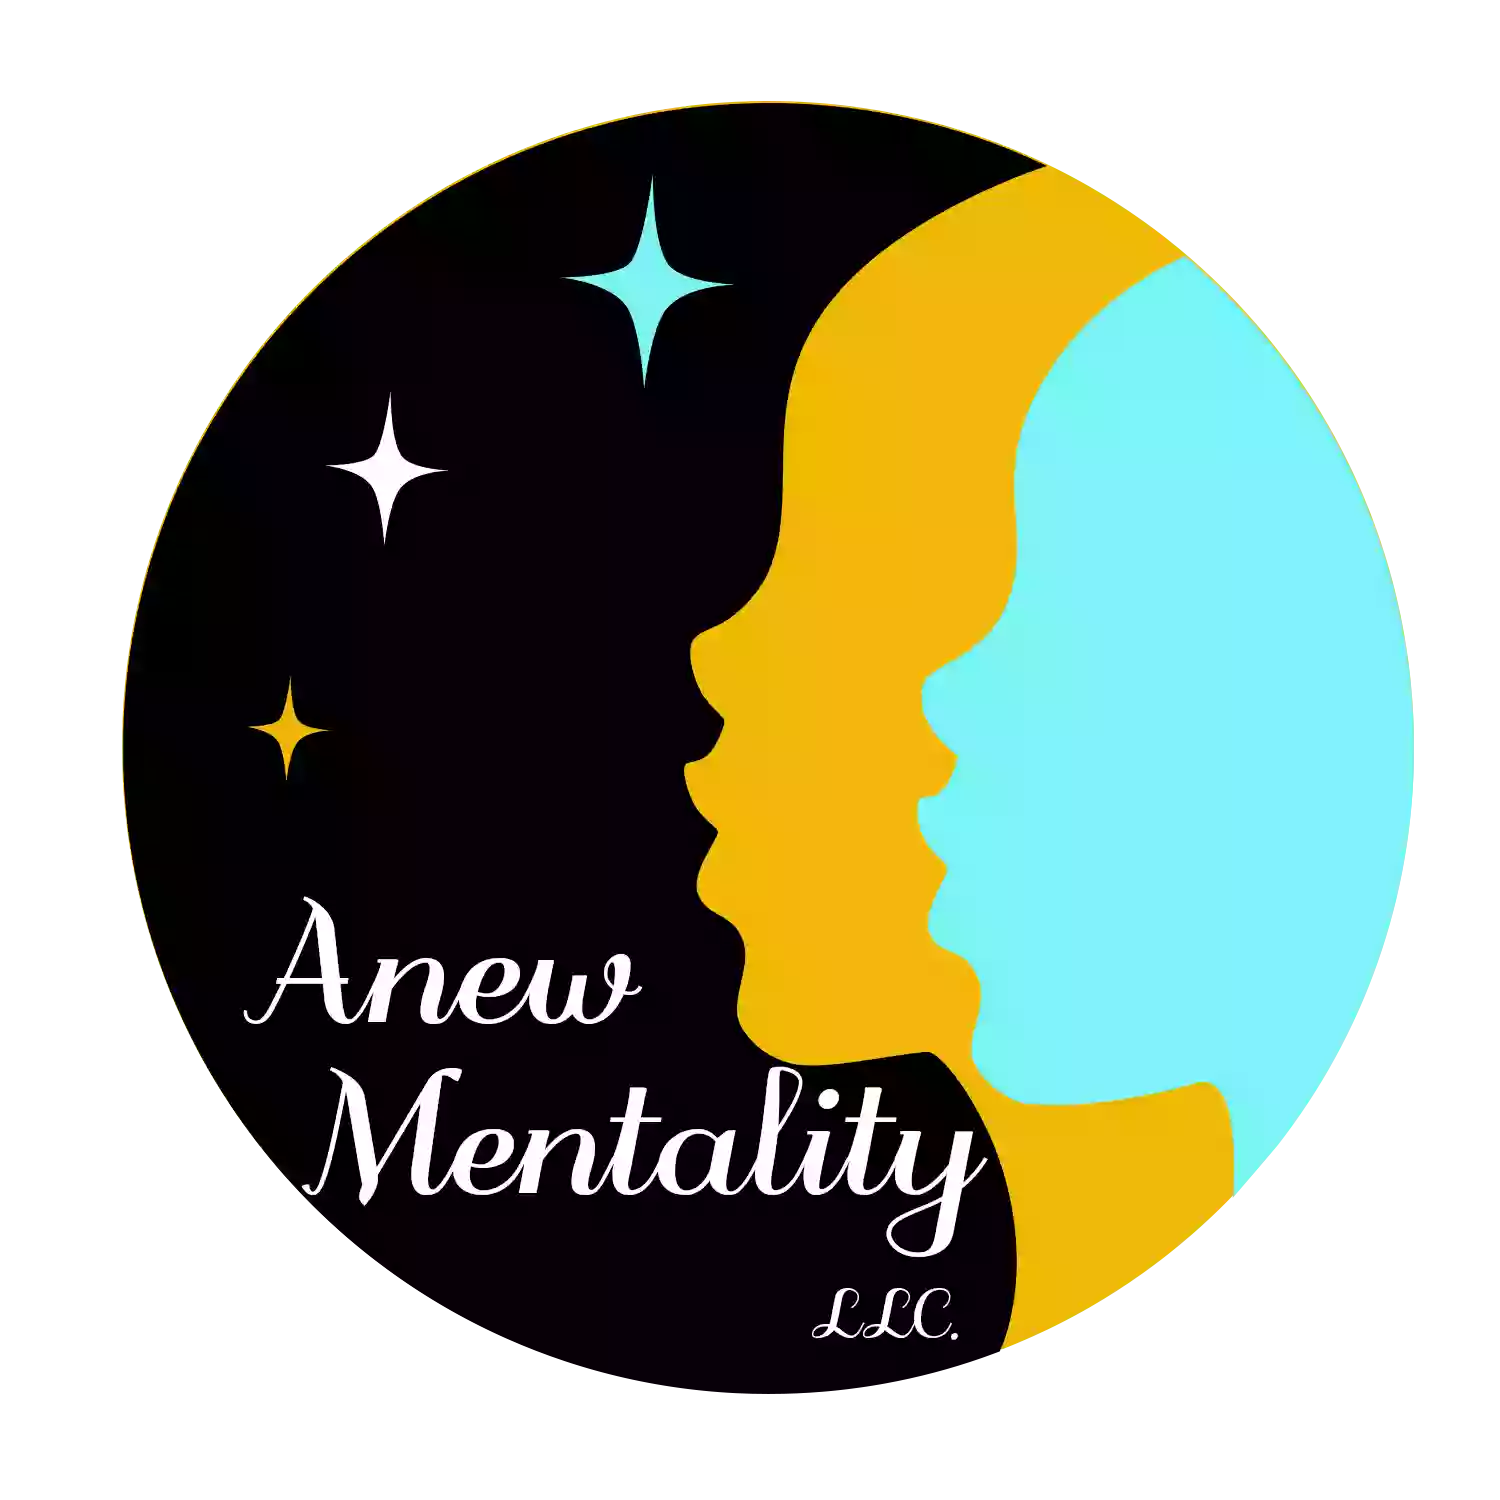 ANEW MENTALITY LLC